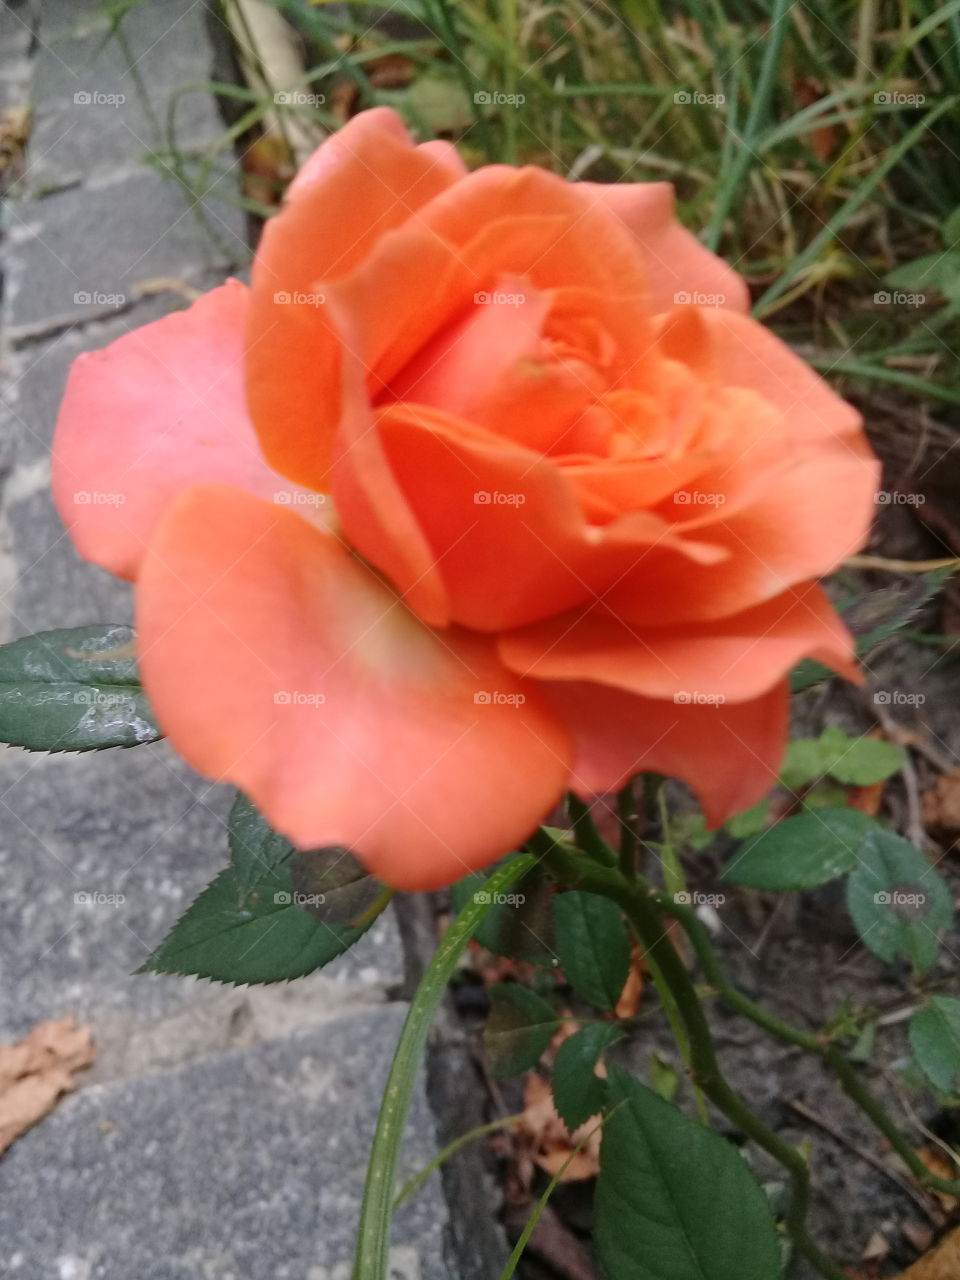 My rose.